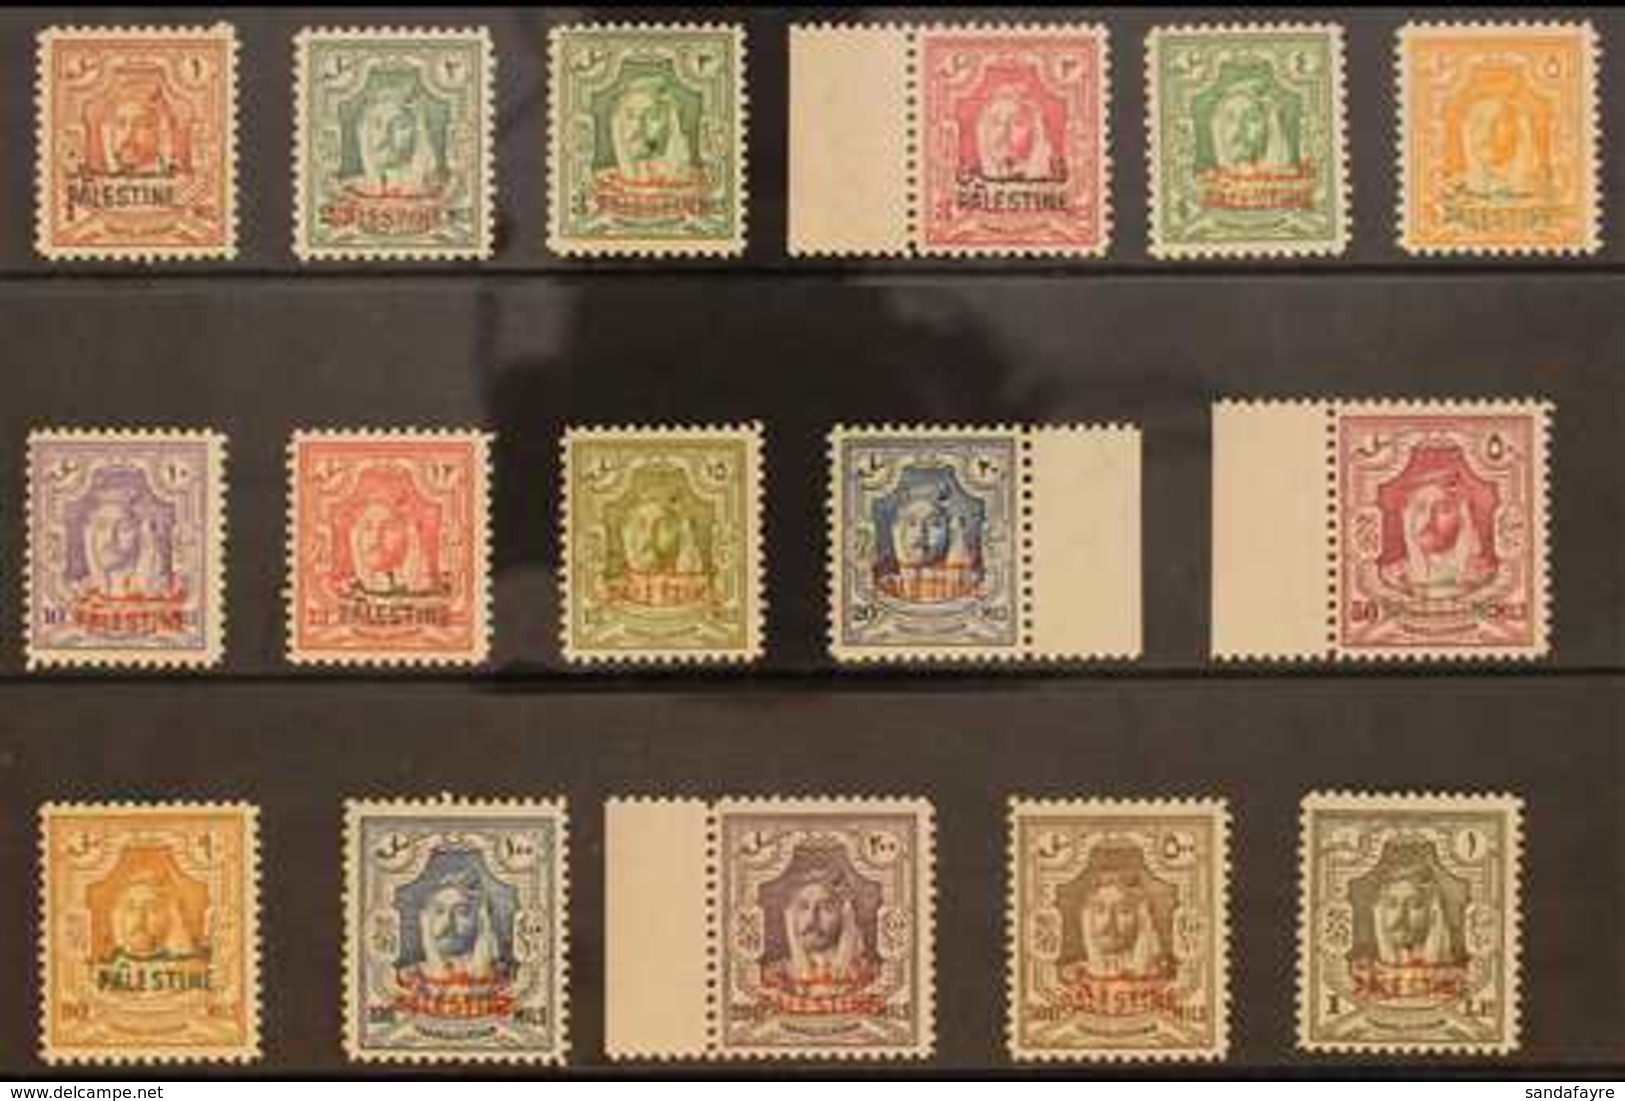 OCCUPATION OF PALESTINE 1948 Jordan Stamps Opt'd "PALESTINE", SG P1/16, Very Fine, Lightly Hinged Mint (16 Stamps) For M - Jordanië